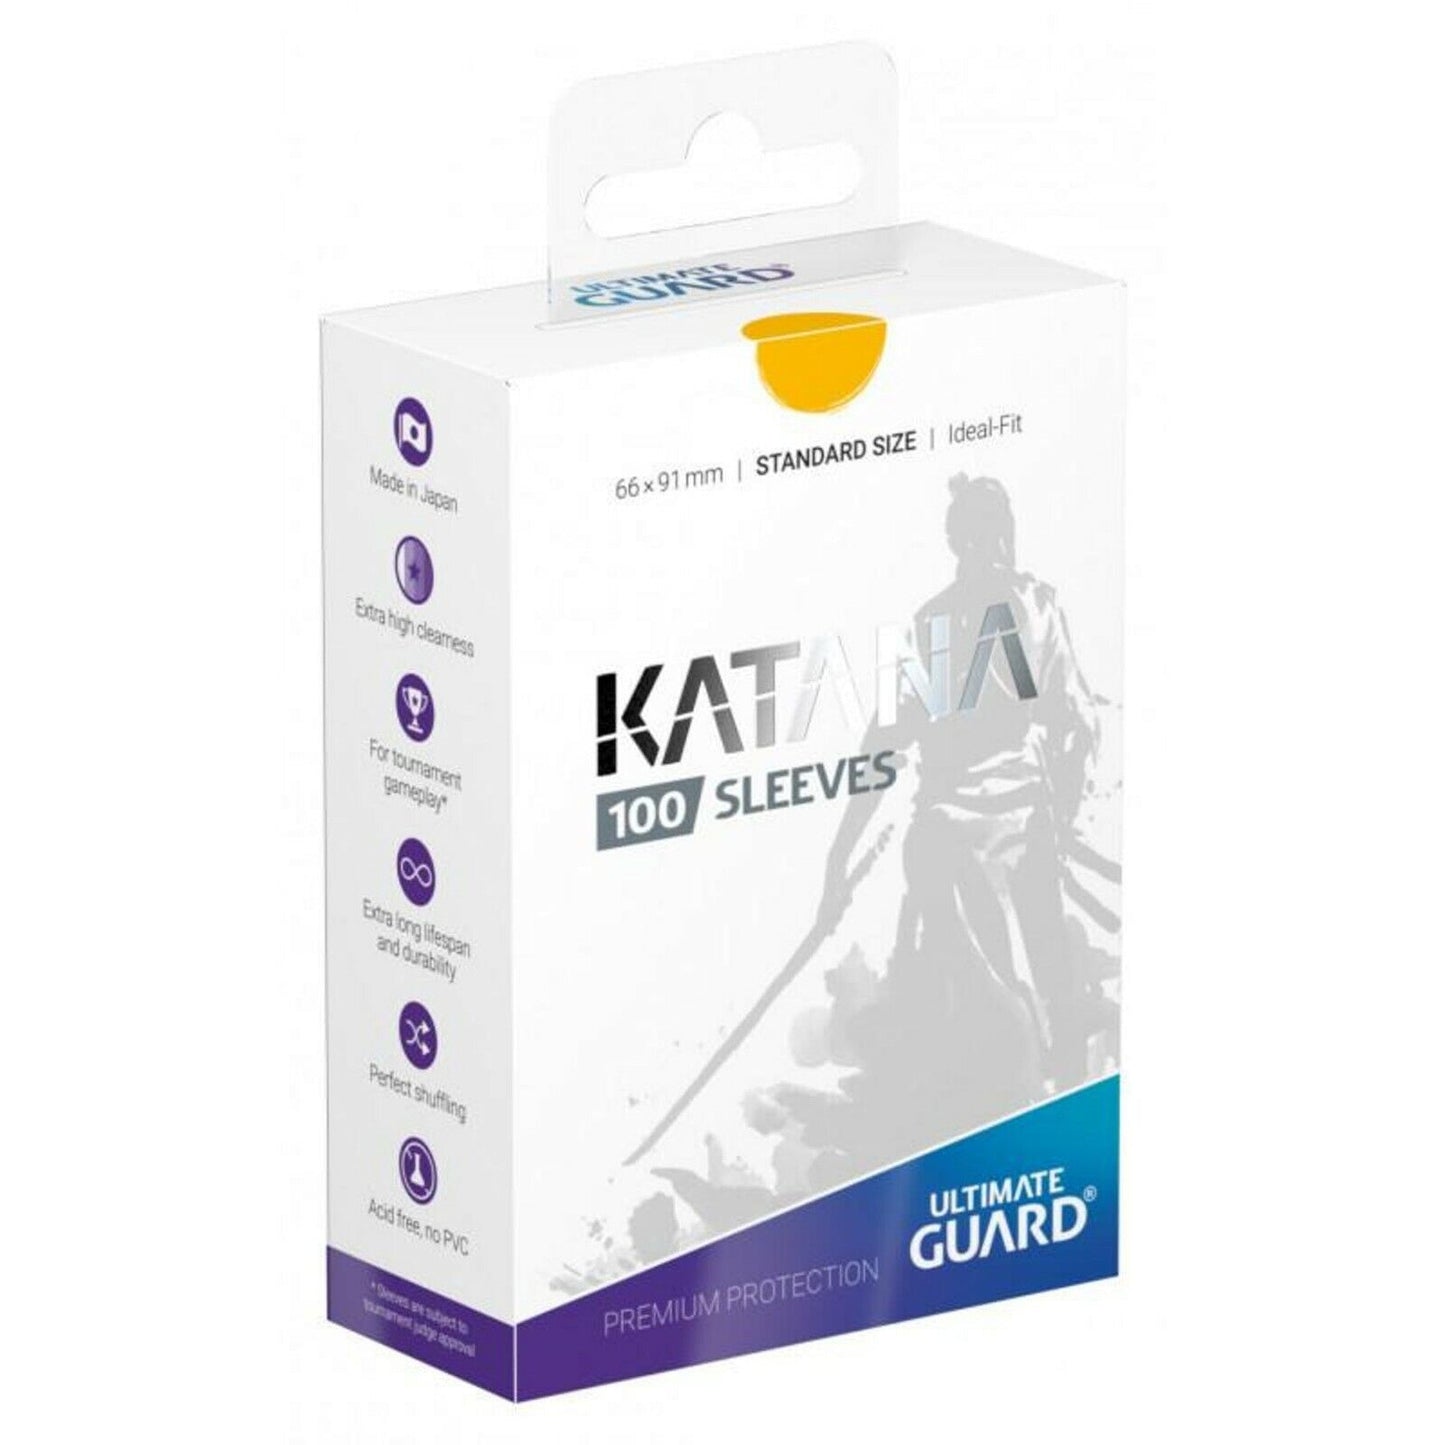 Katana Sleeves - Standard Size 100ct (Color Options)